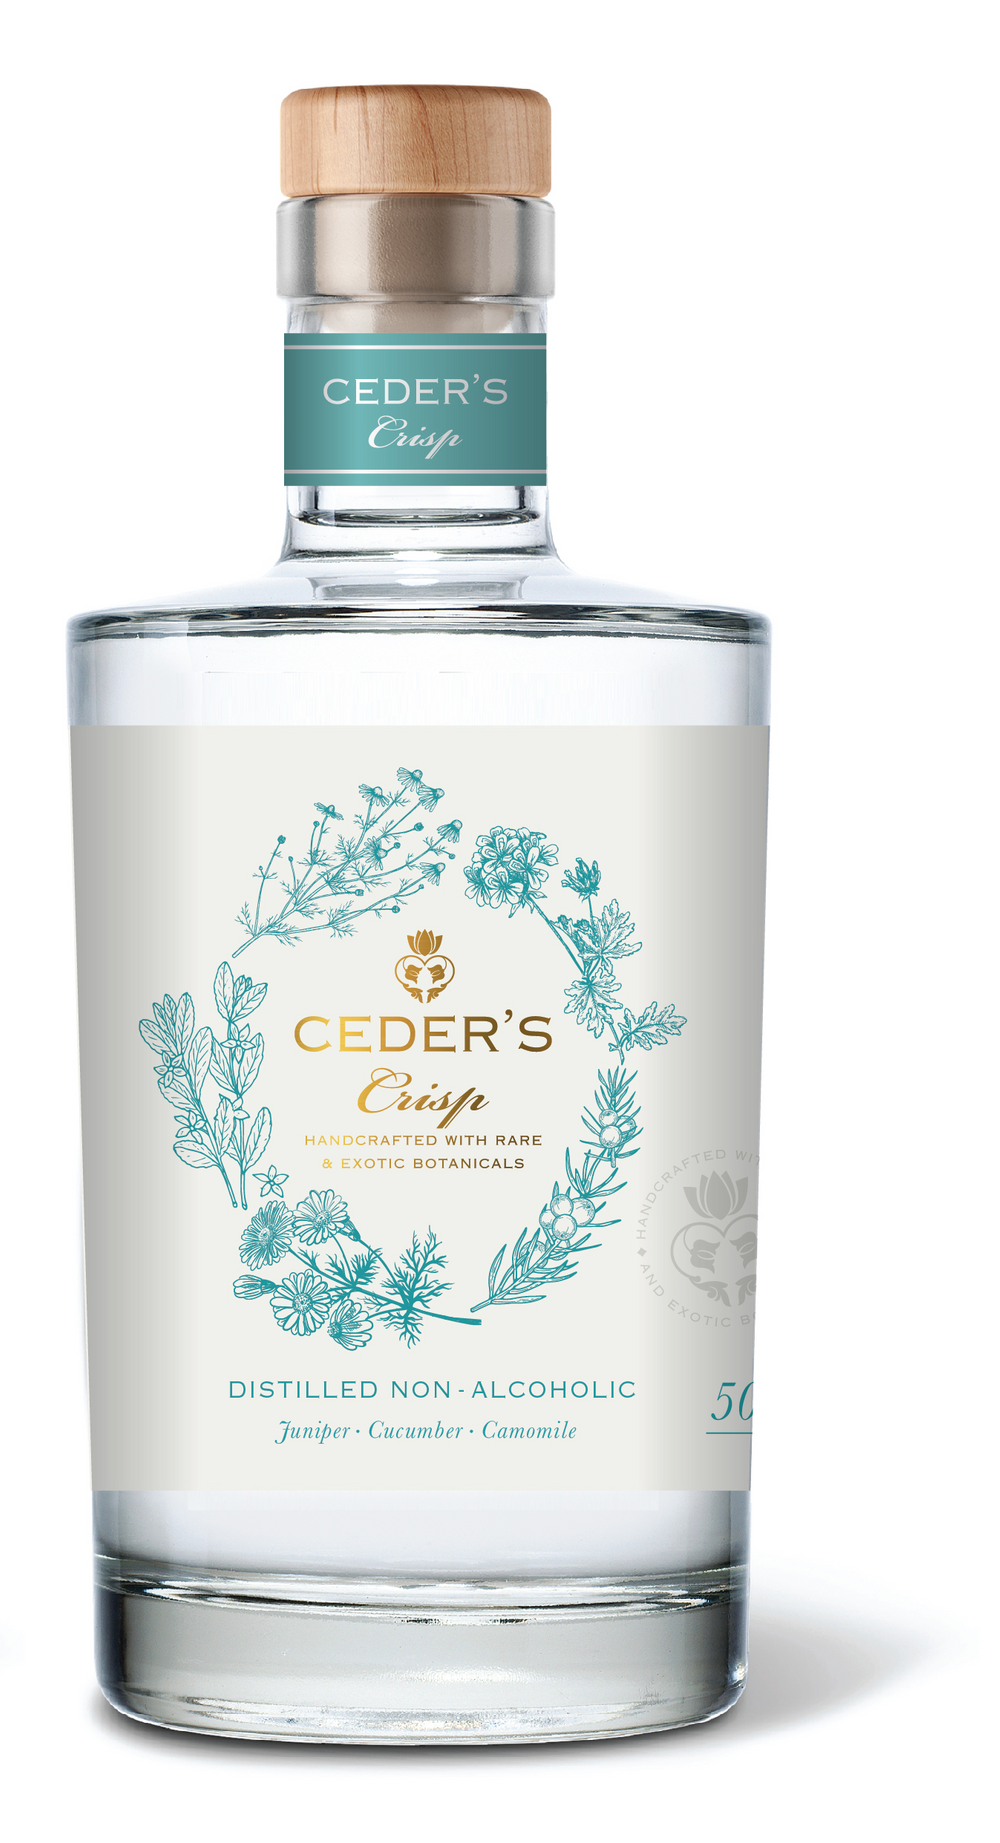 Ceder's Crisp Distilled Non-Alcoholic 500ml